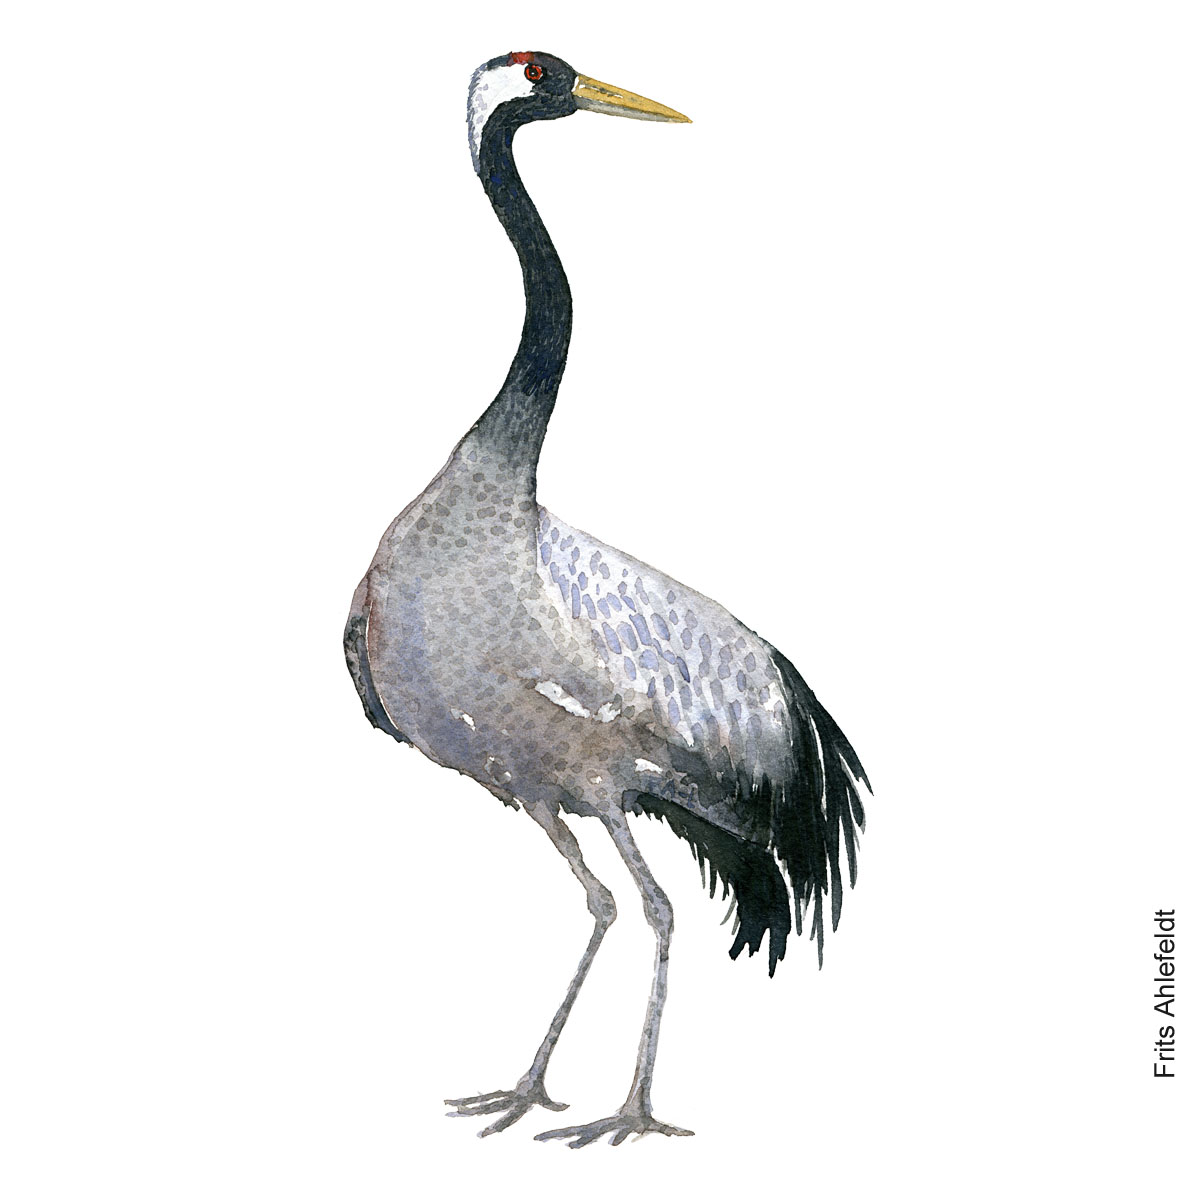 Trane - Crane bird watercolor painting. Artwork by Frits Ahlefeldt. Fugle akvarel